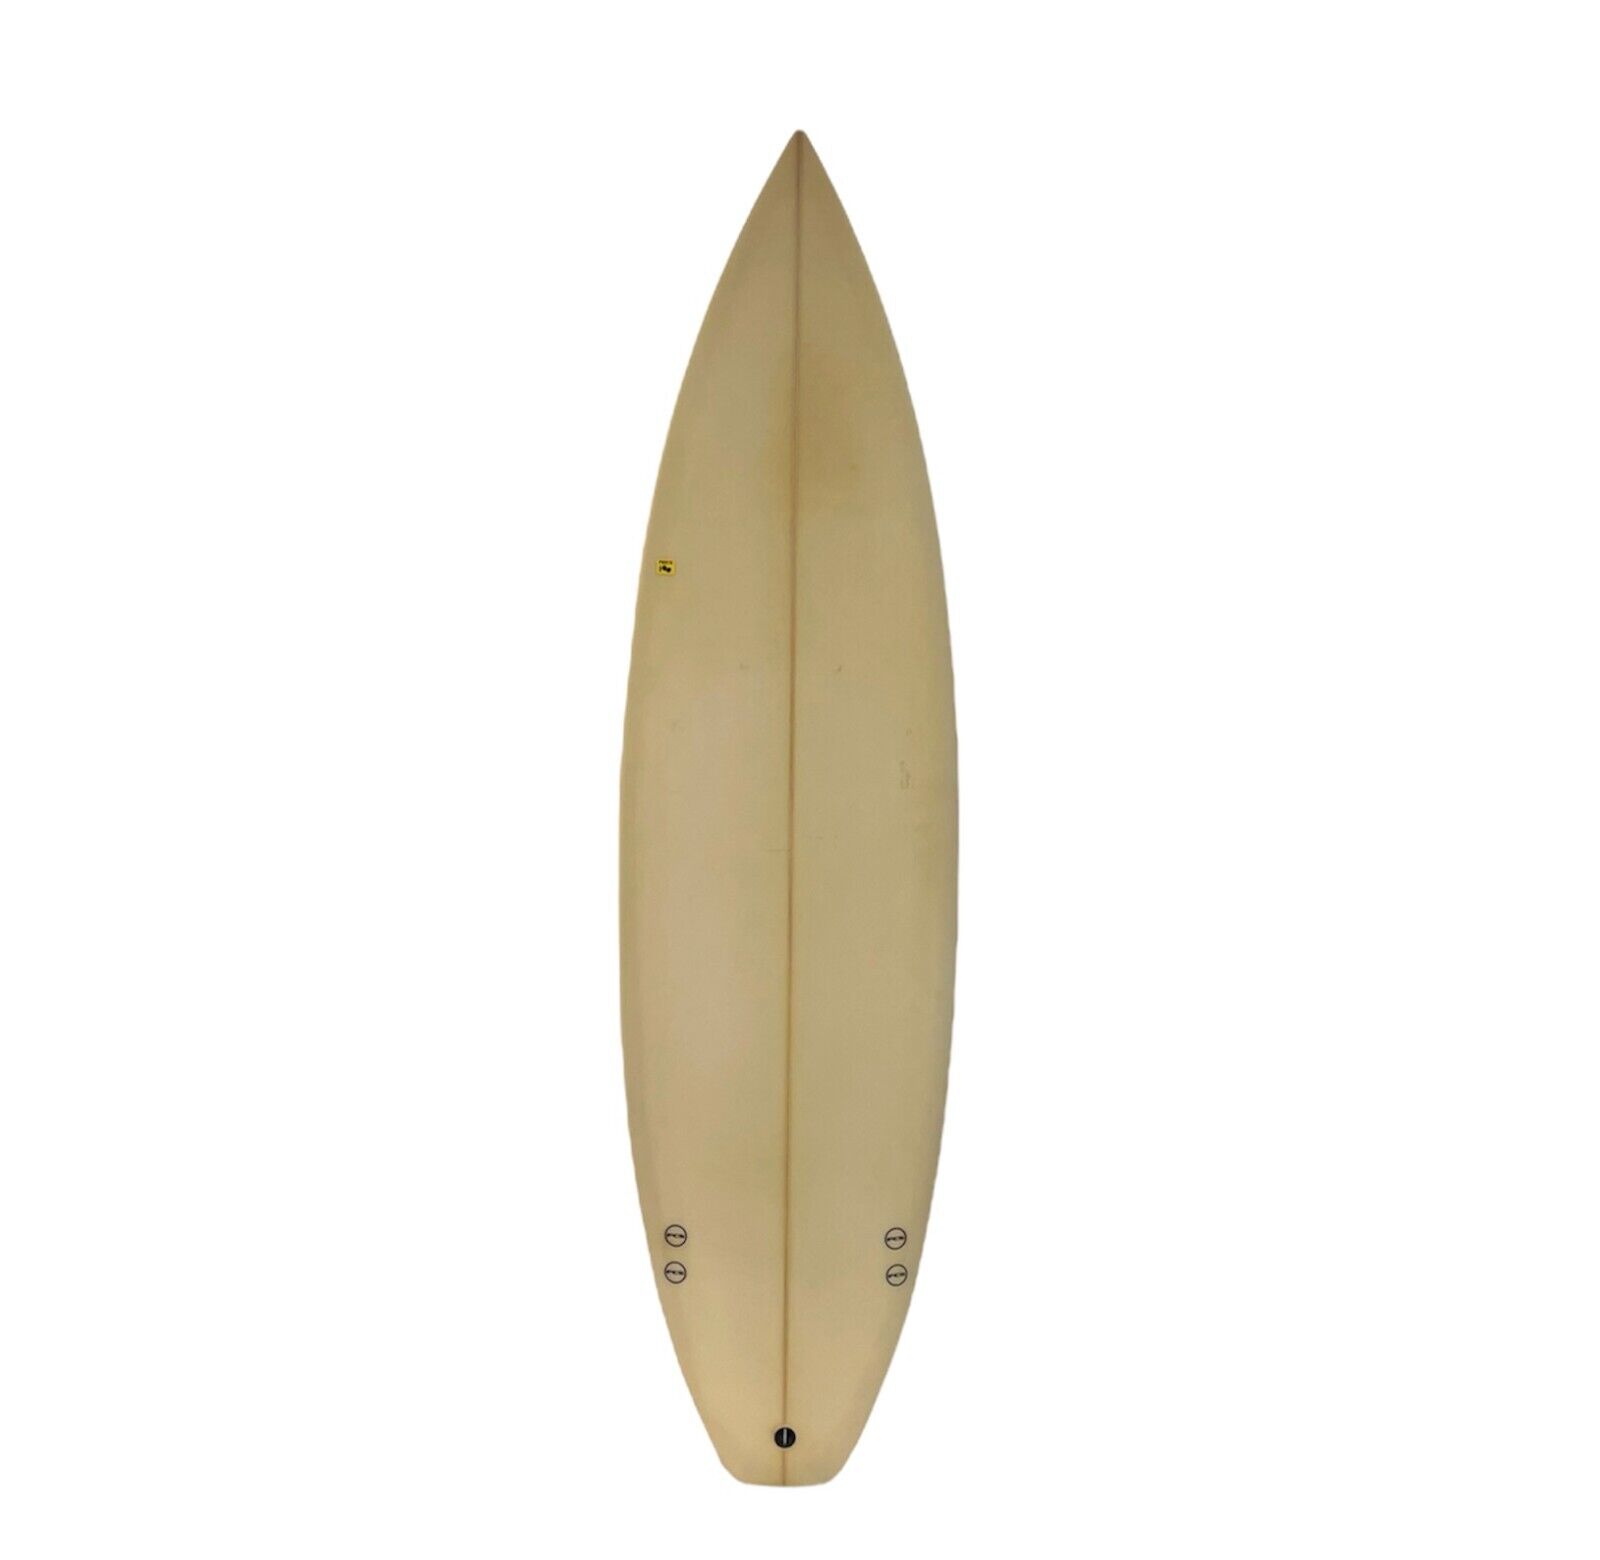 6'0" x 18 3/4" x 2 1/4" Shortboard Performance Surfboard | M21 Sports Surf Shop